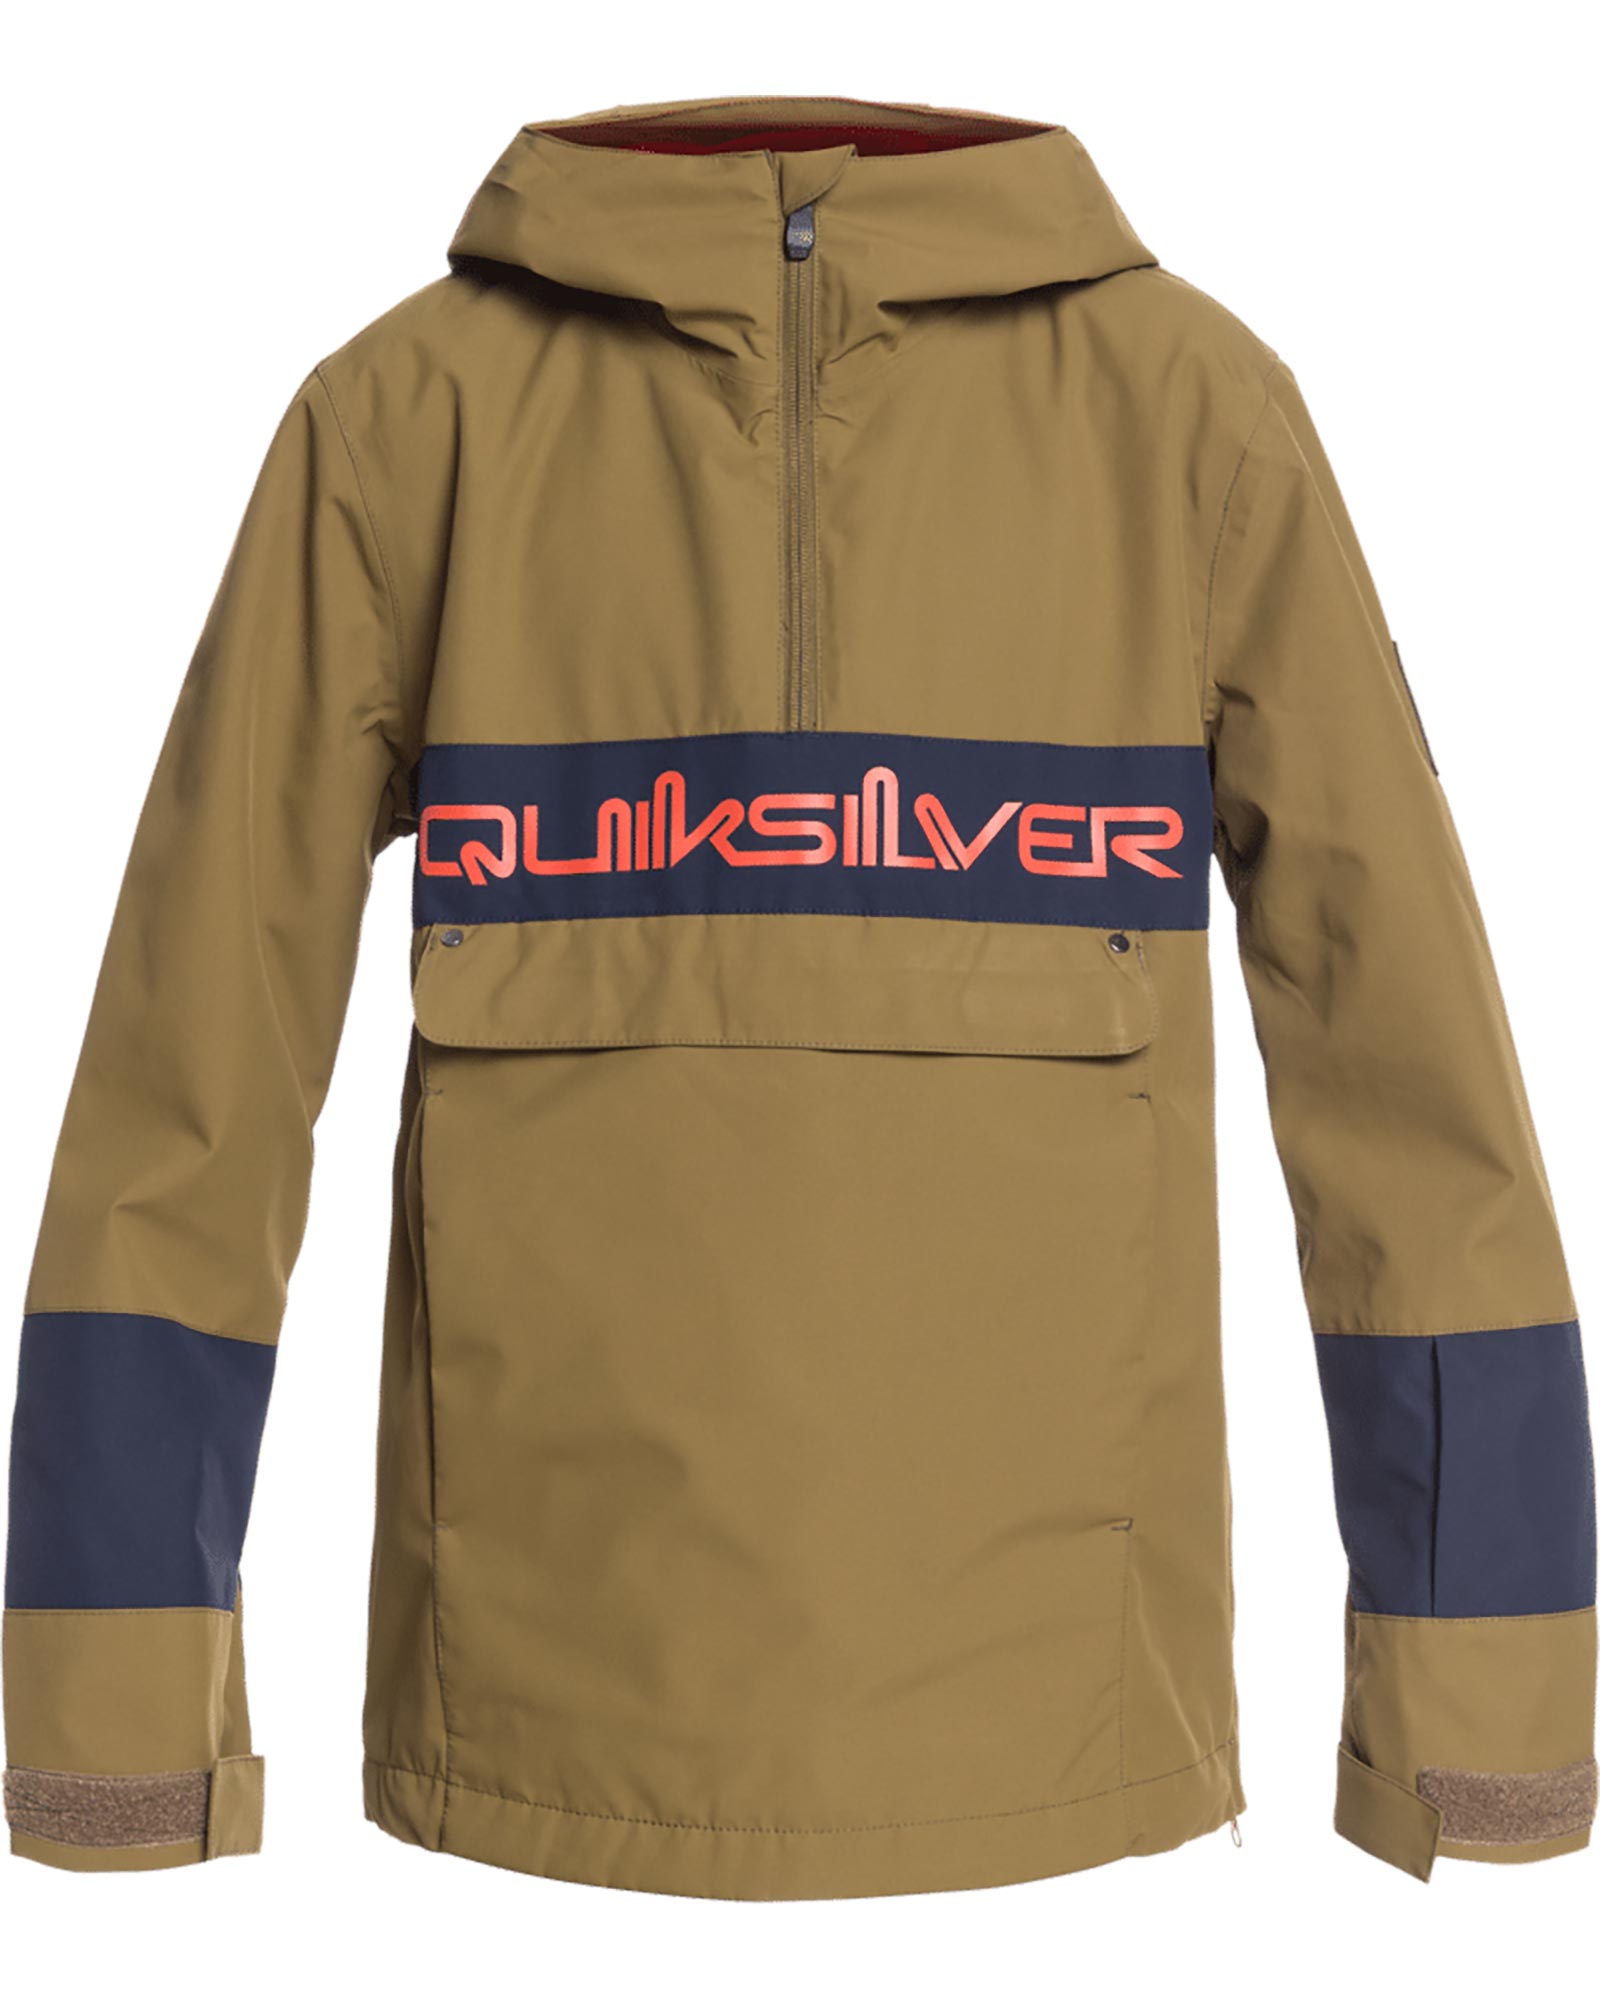 Quiksilver Steeze Boys Jacket K14